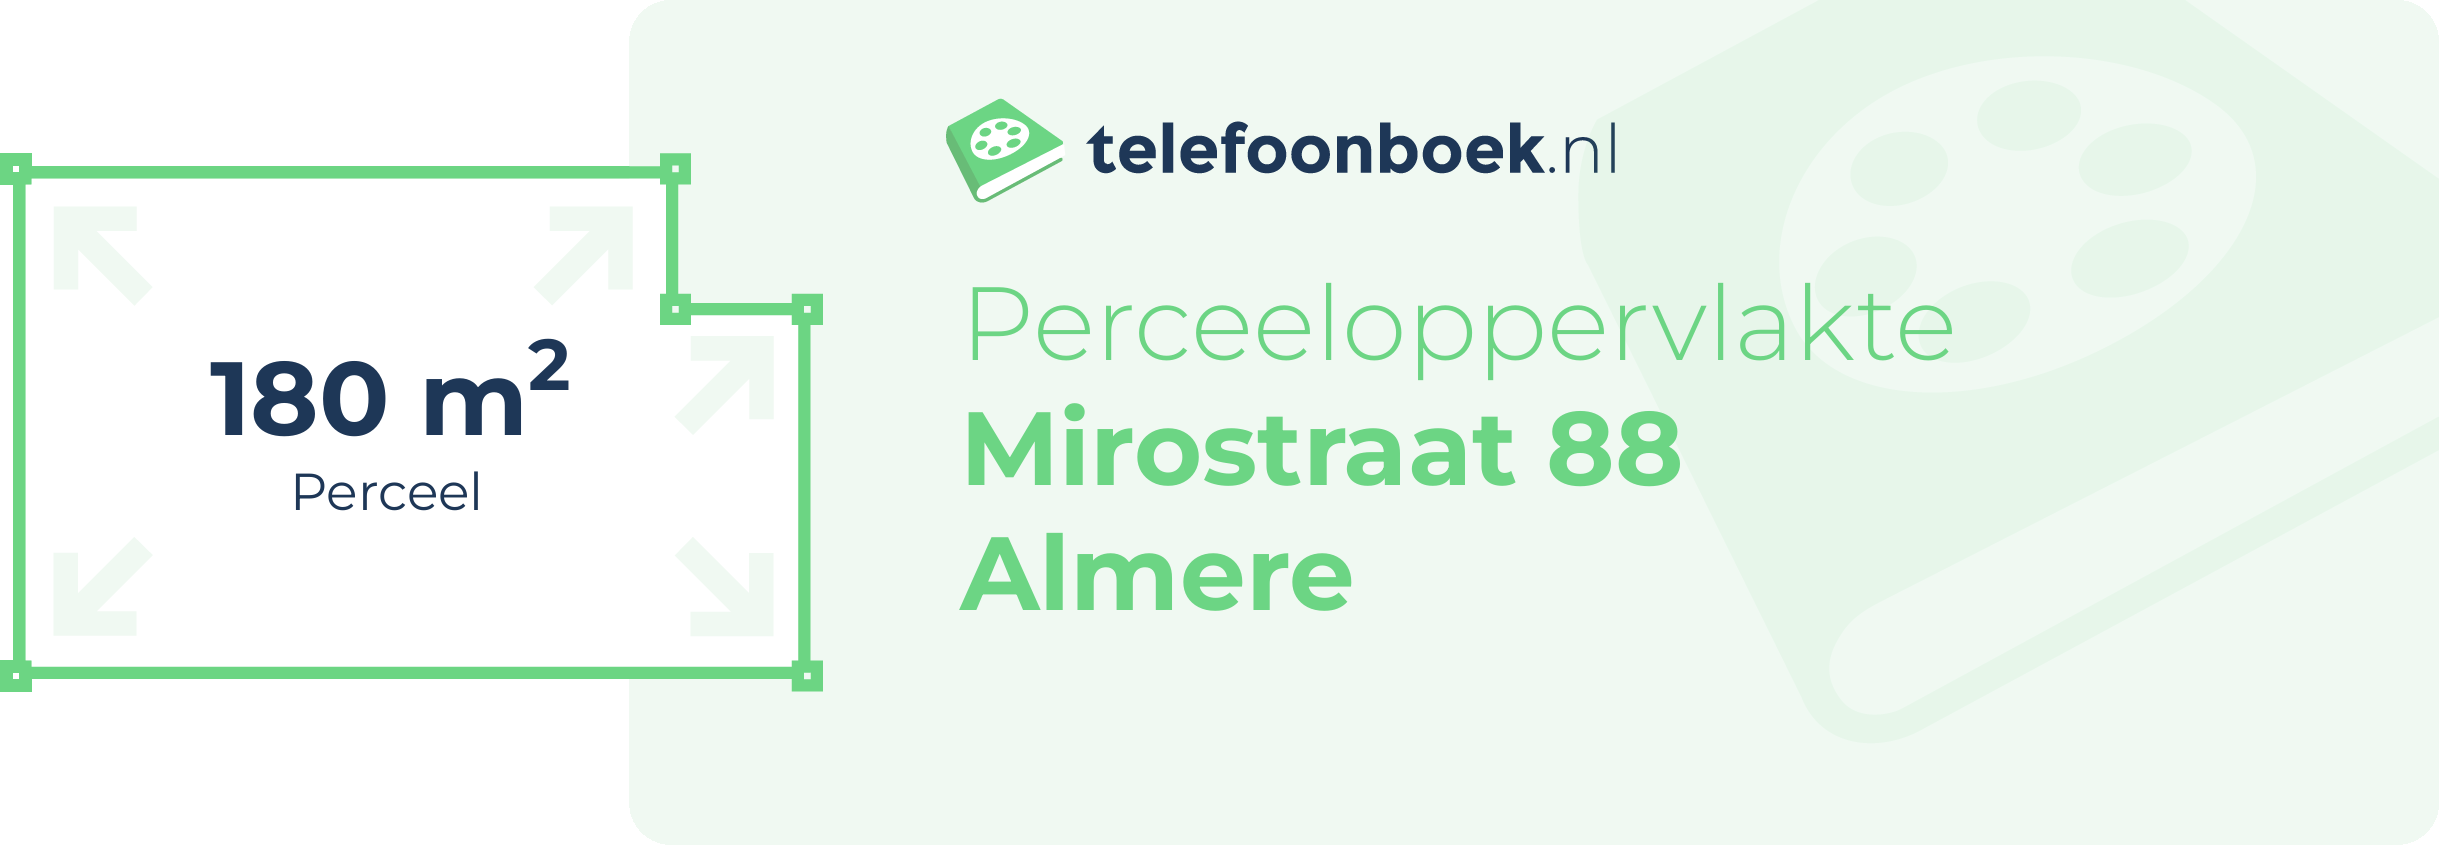 Perceeloppervlakte Mirostraat 88 Almere